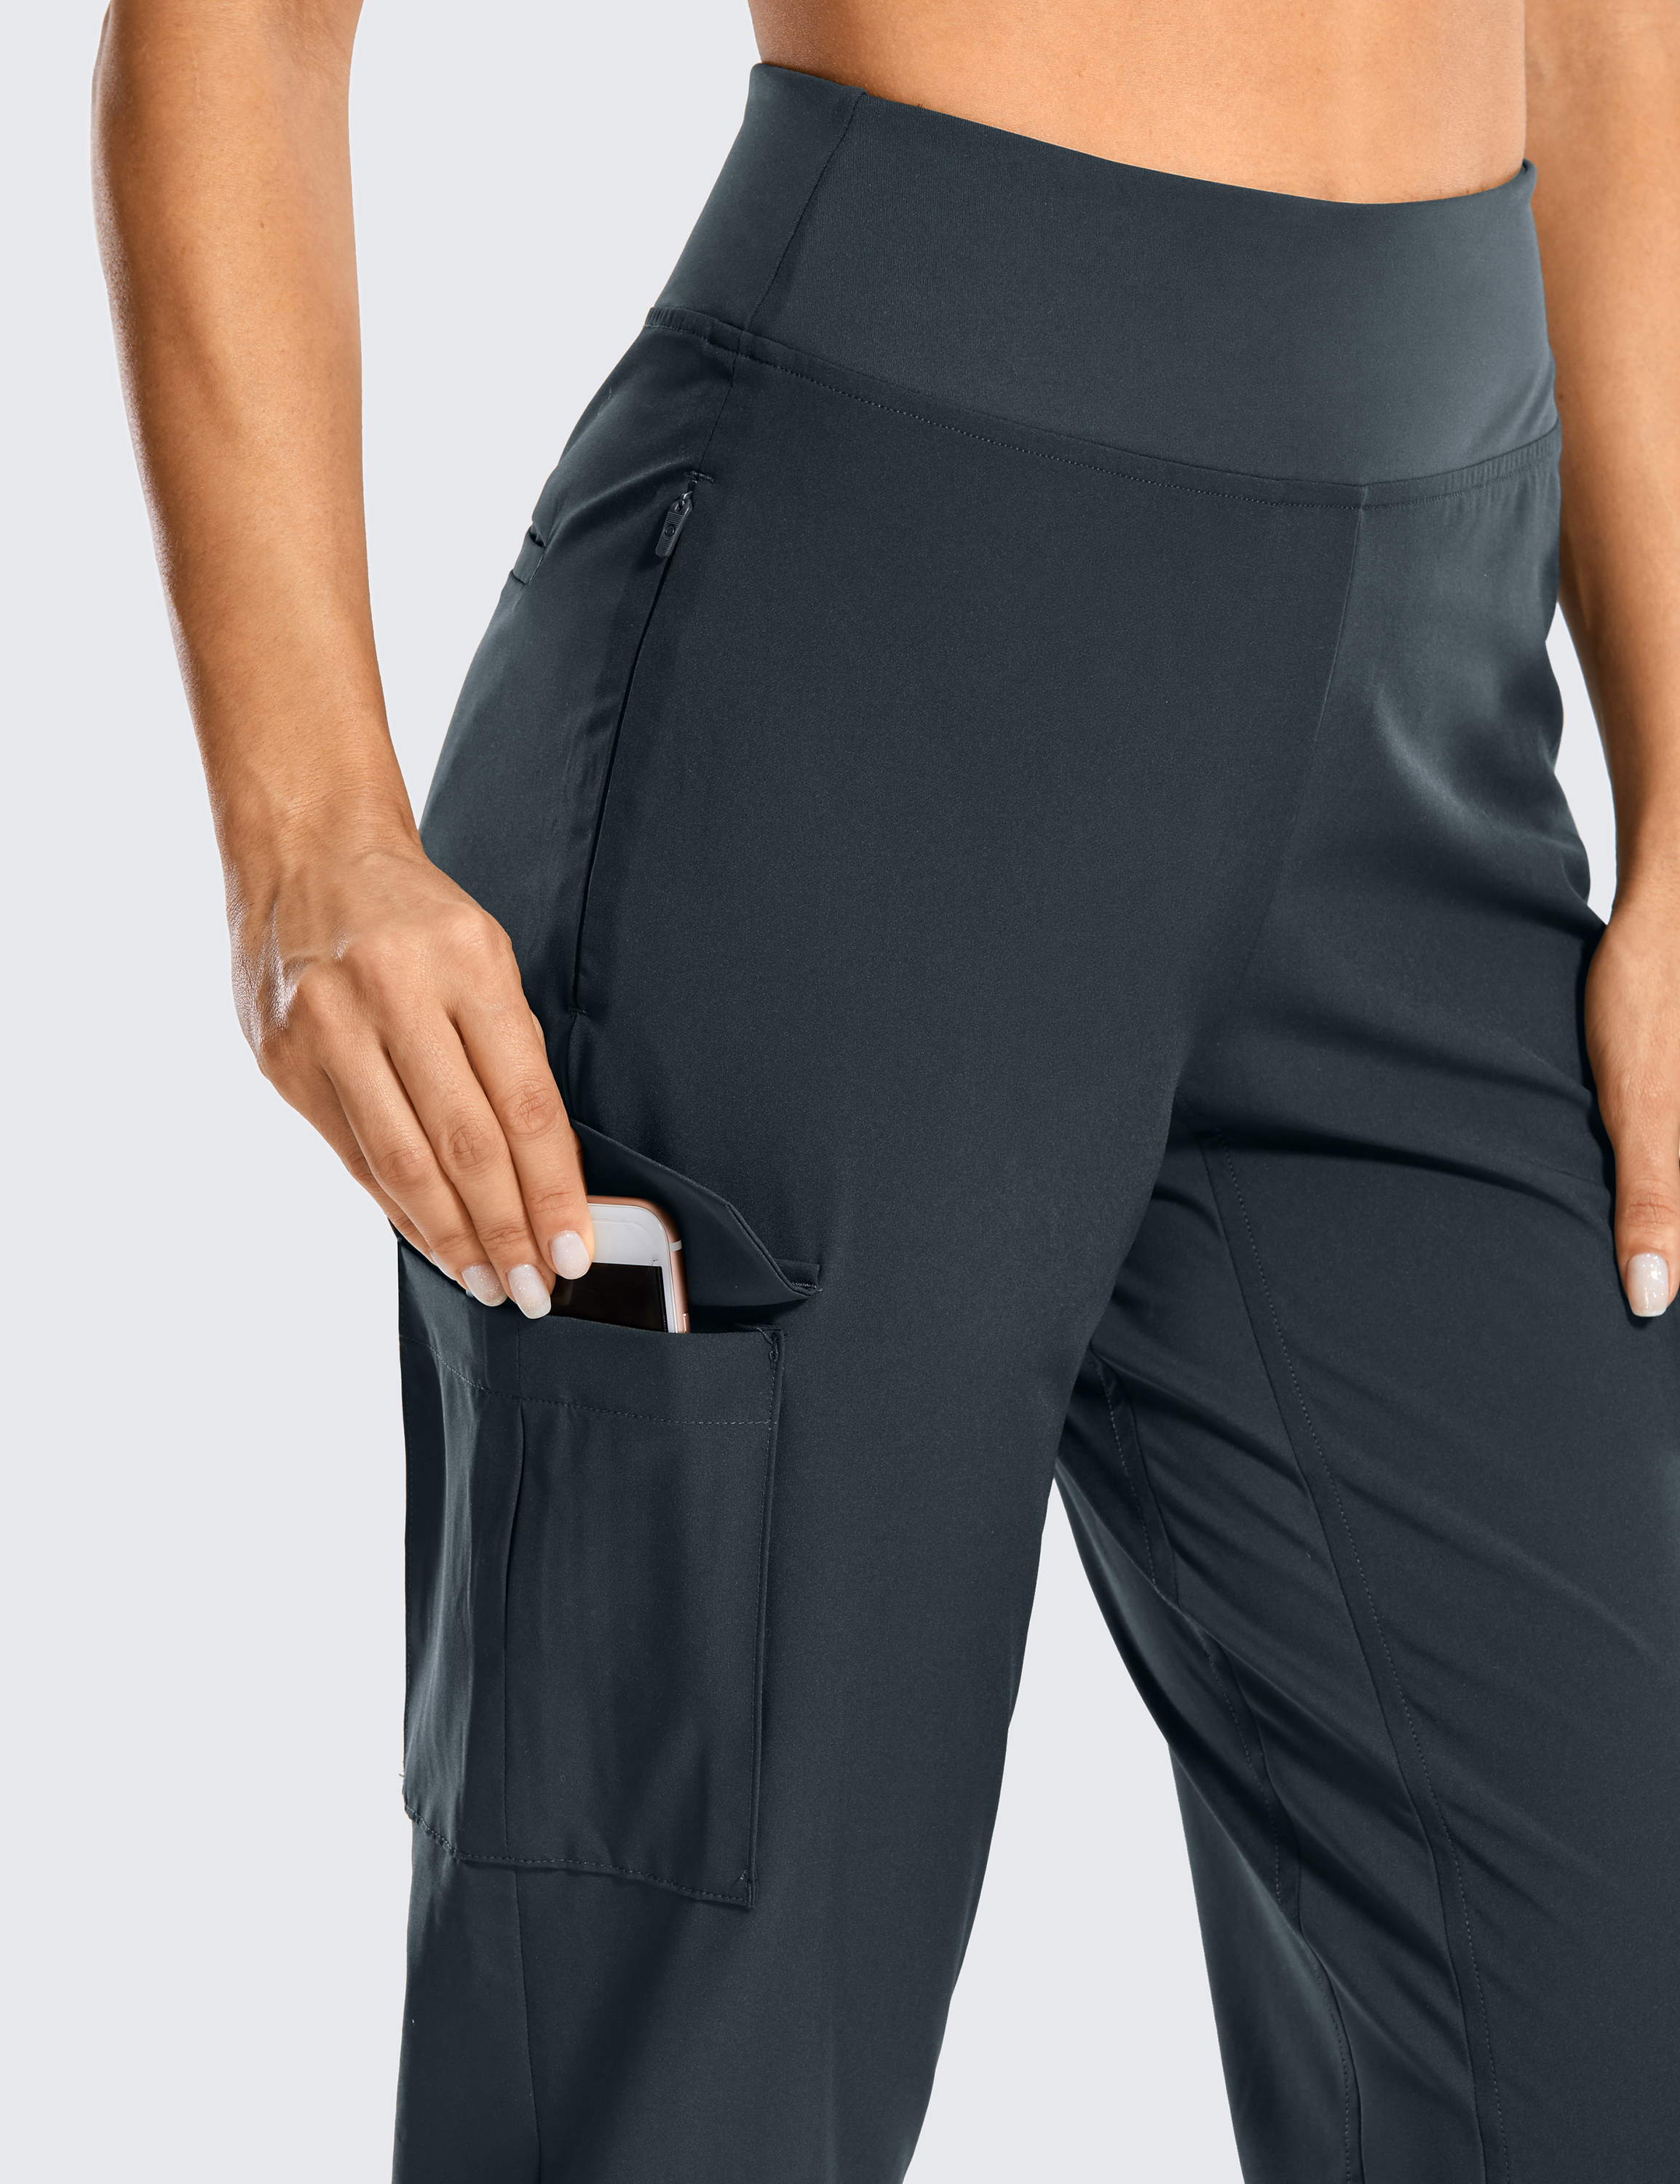 yoga pants with pockets